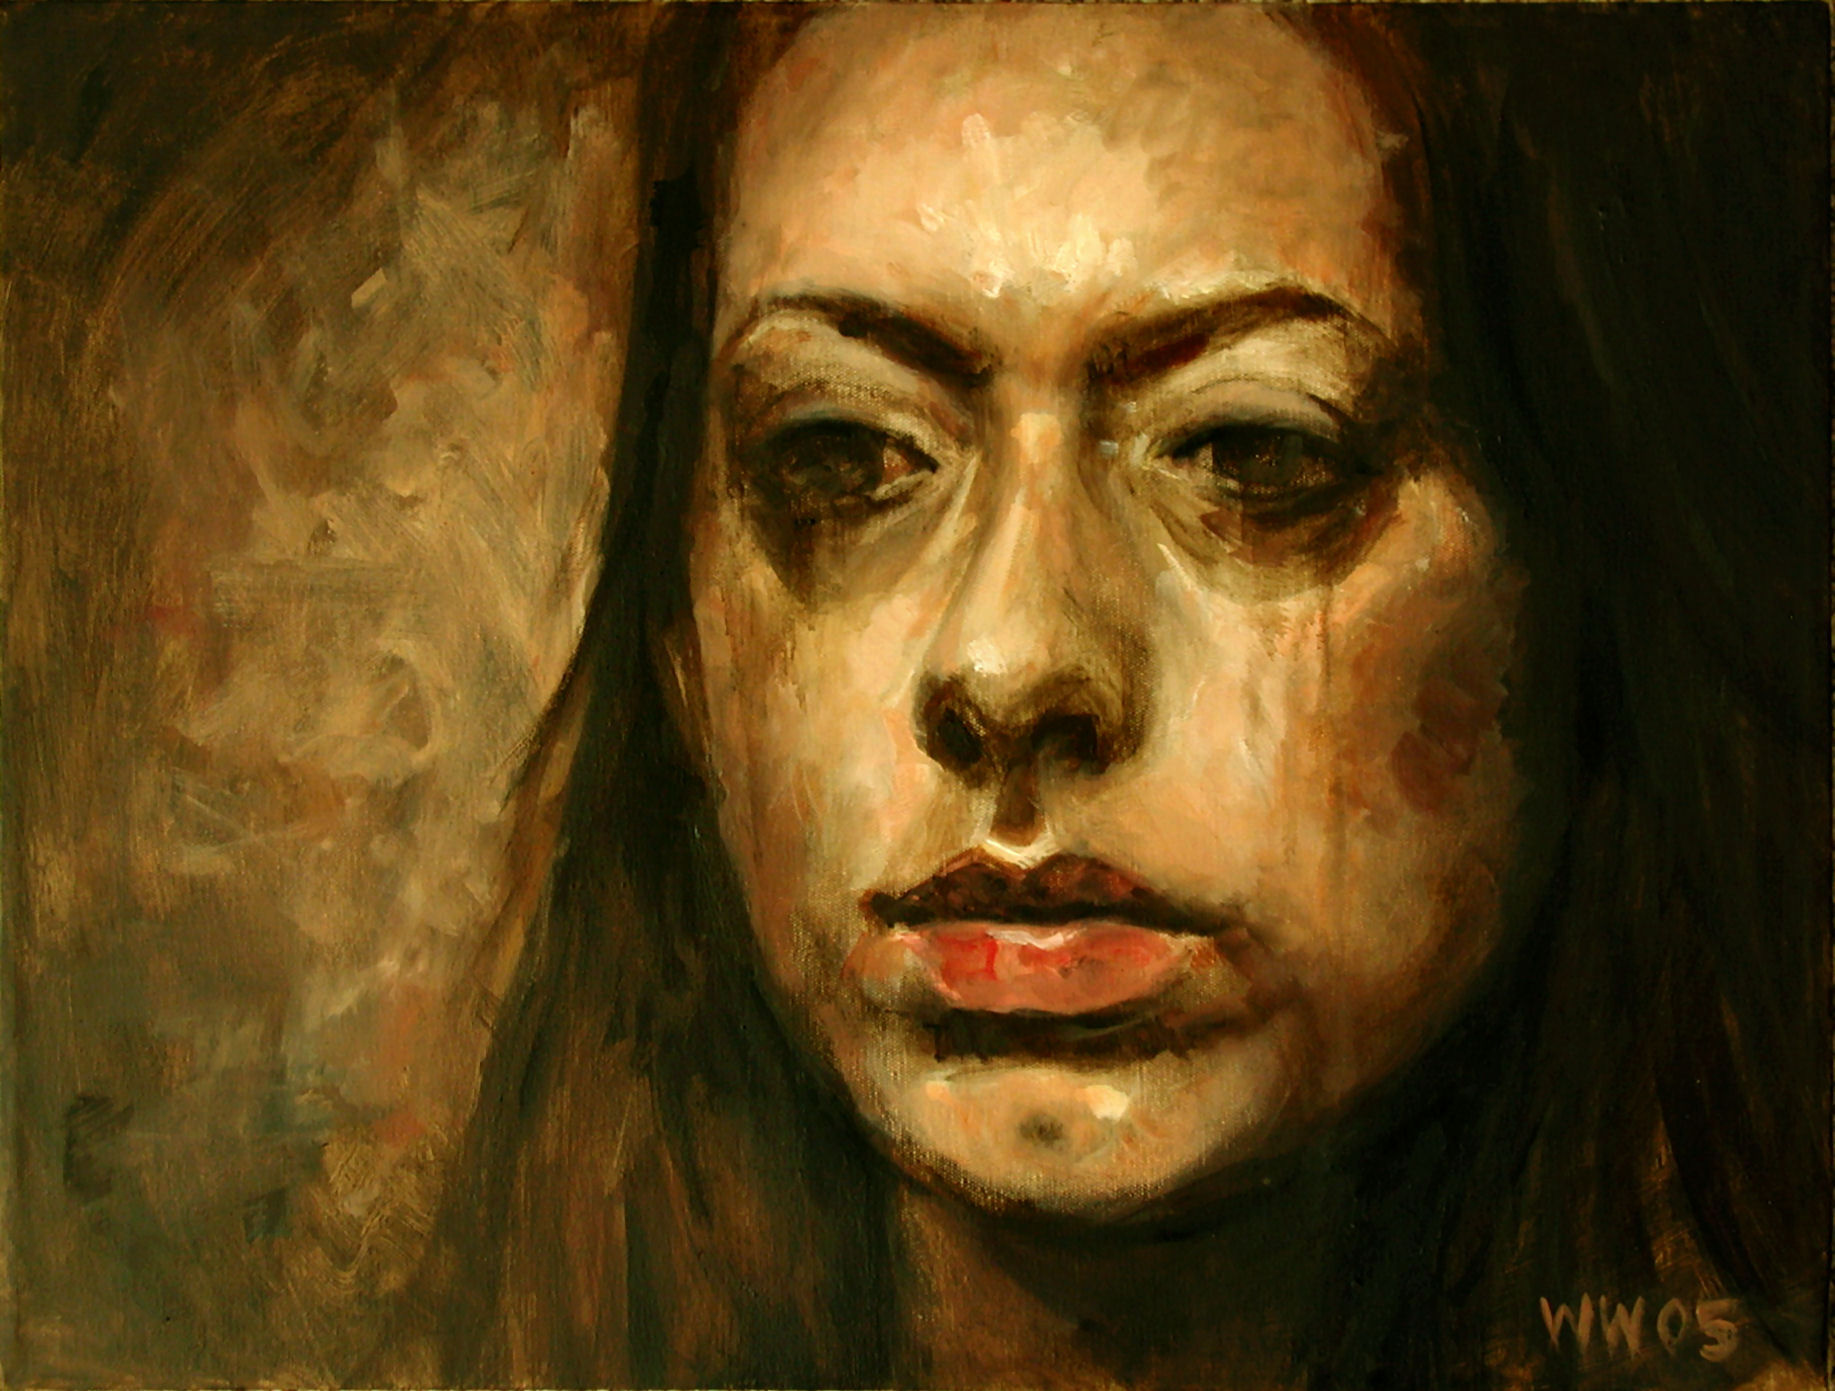 Tristesse - selfportrait Jan.2005